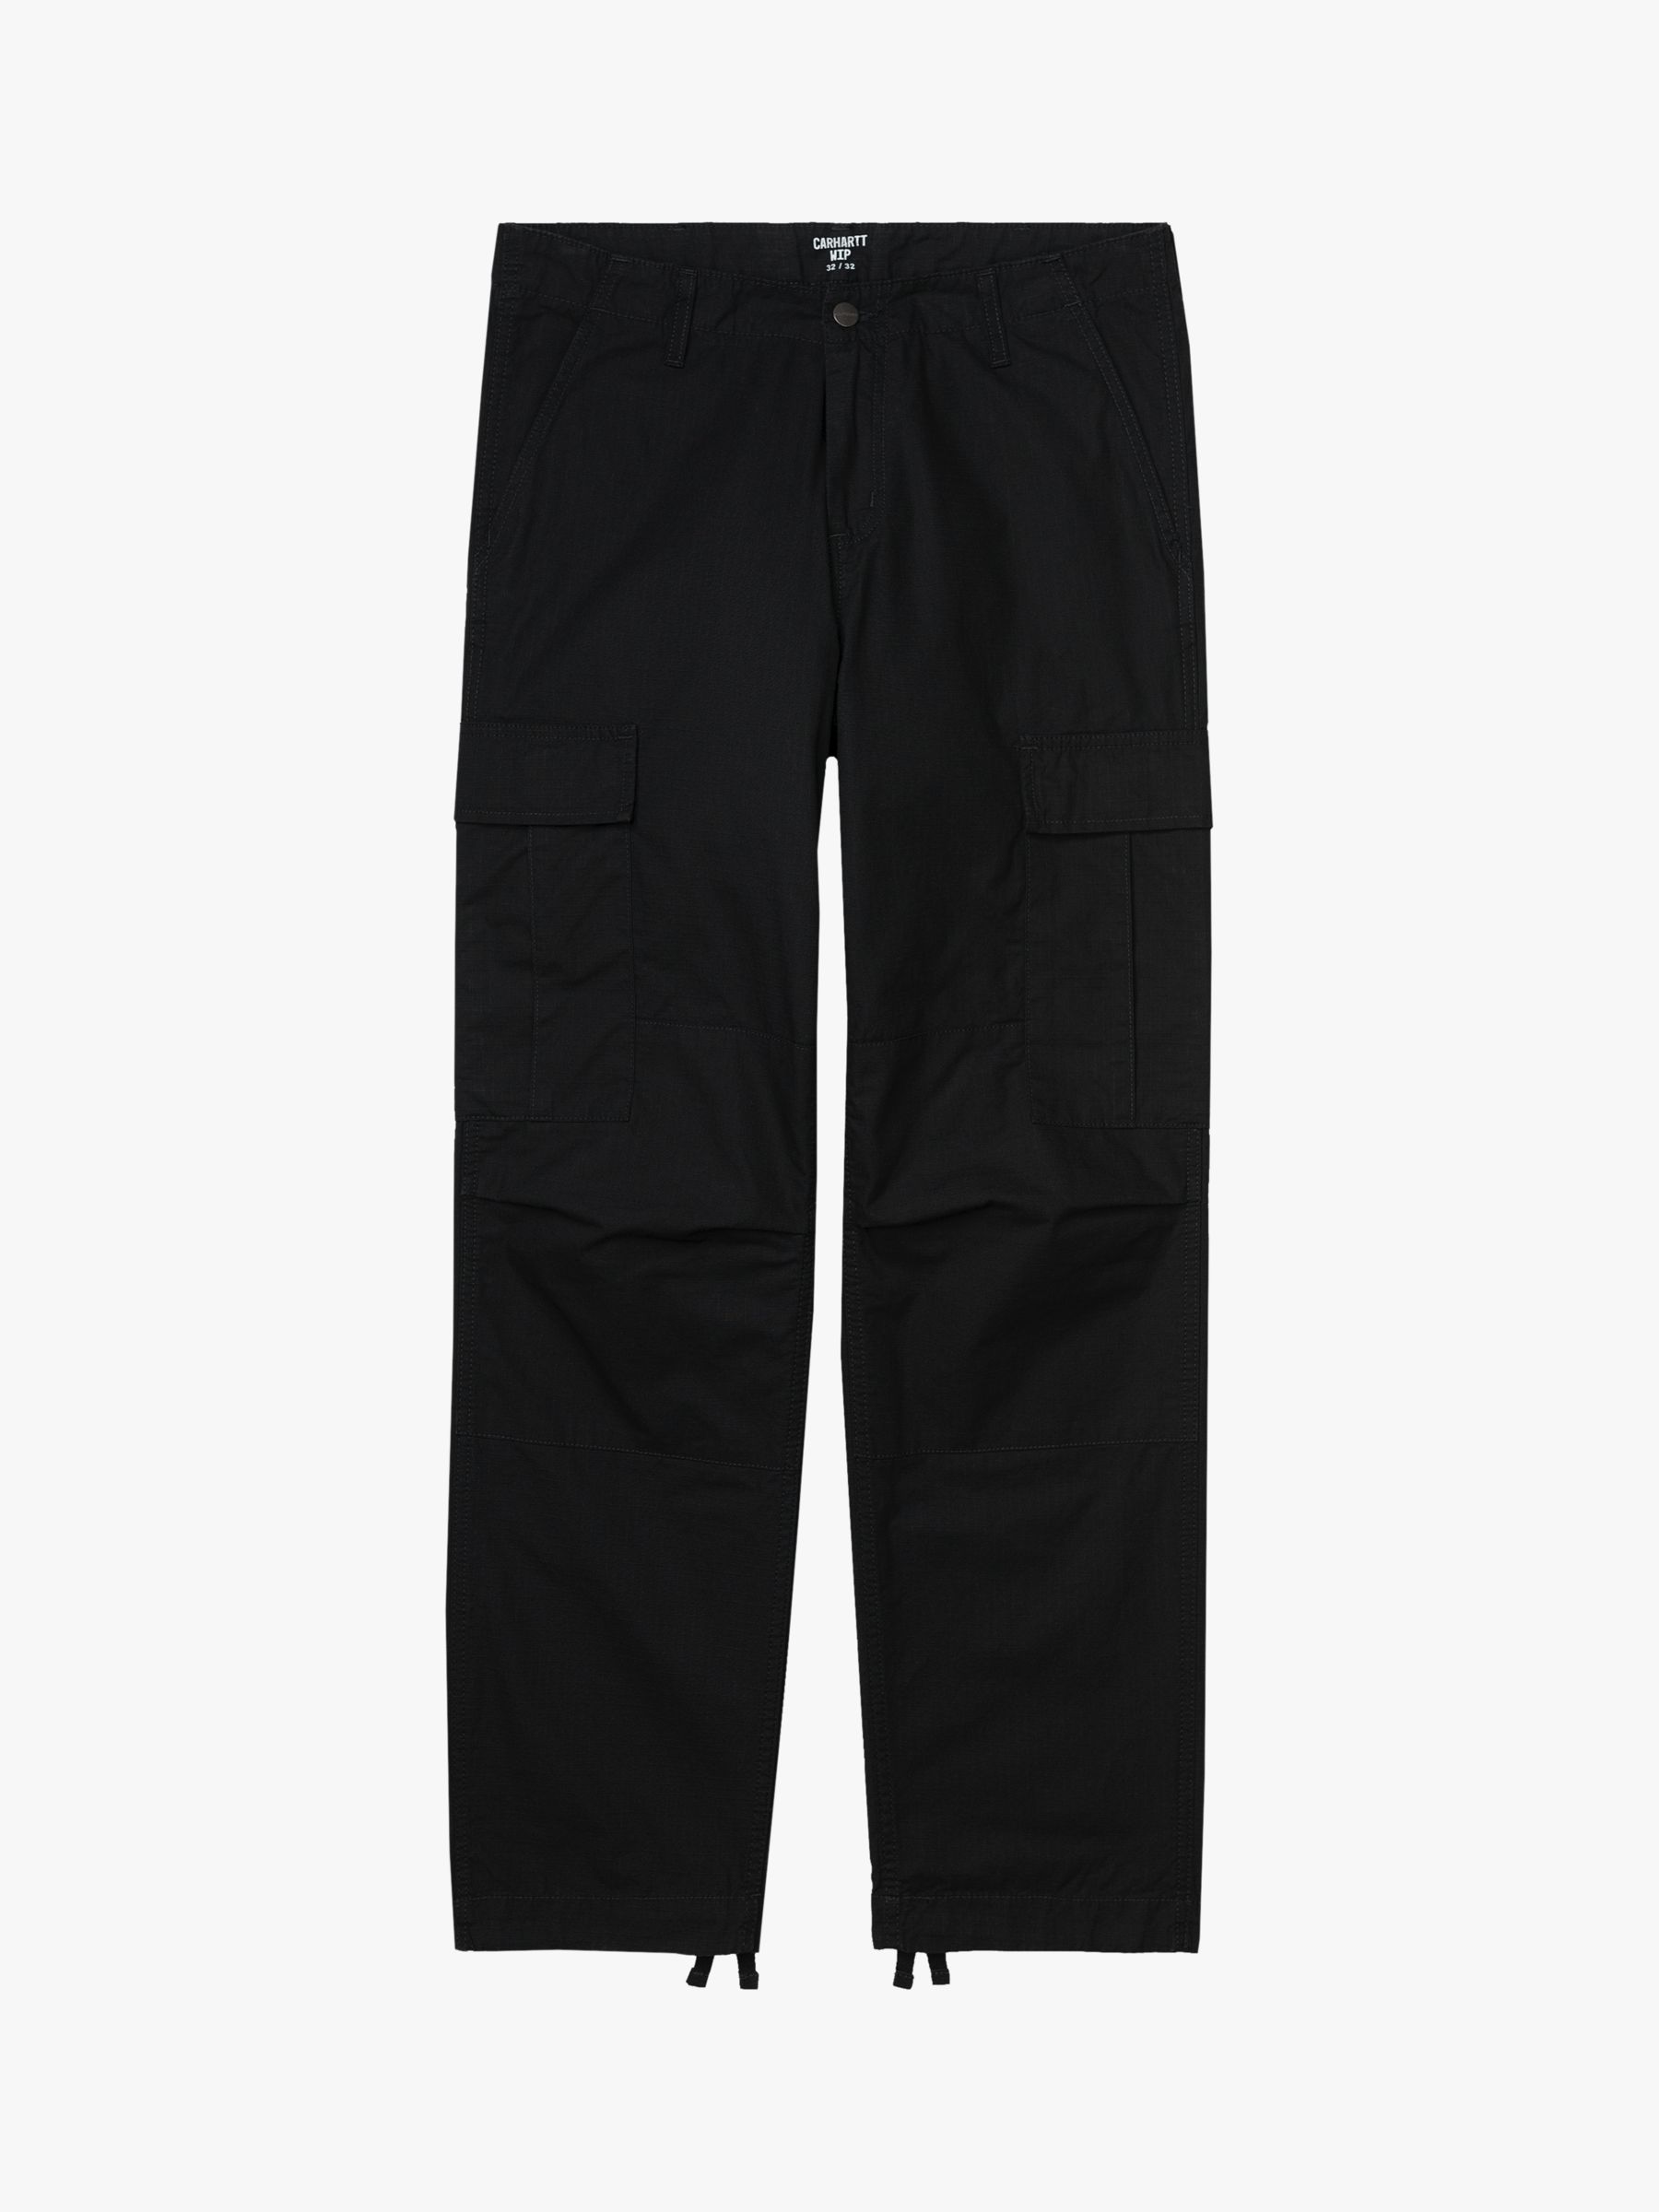 Carhartt WIP Regular Cargo Trousers, Black, 30R